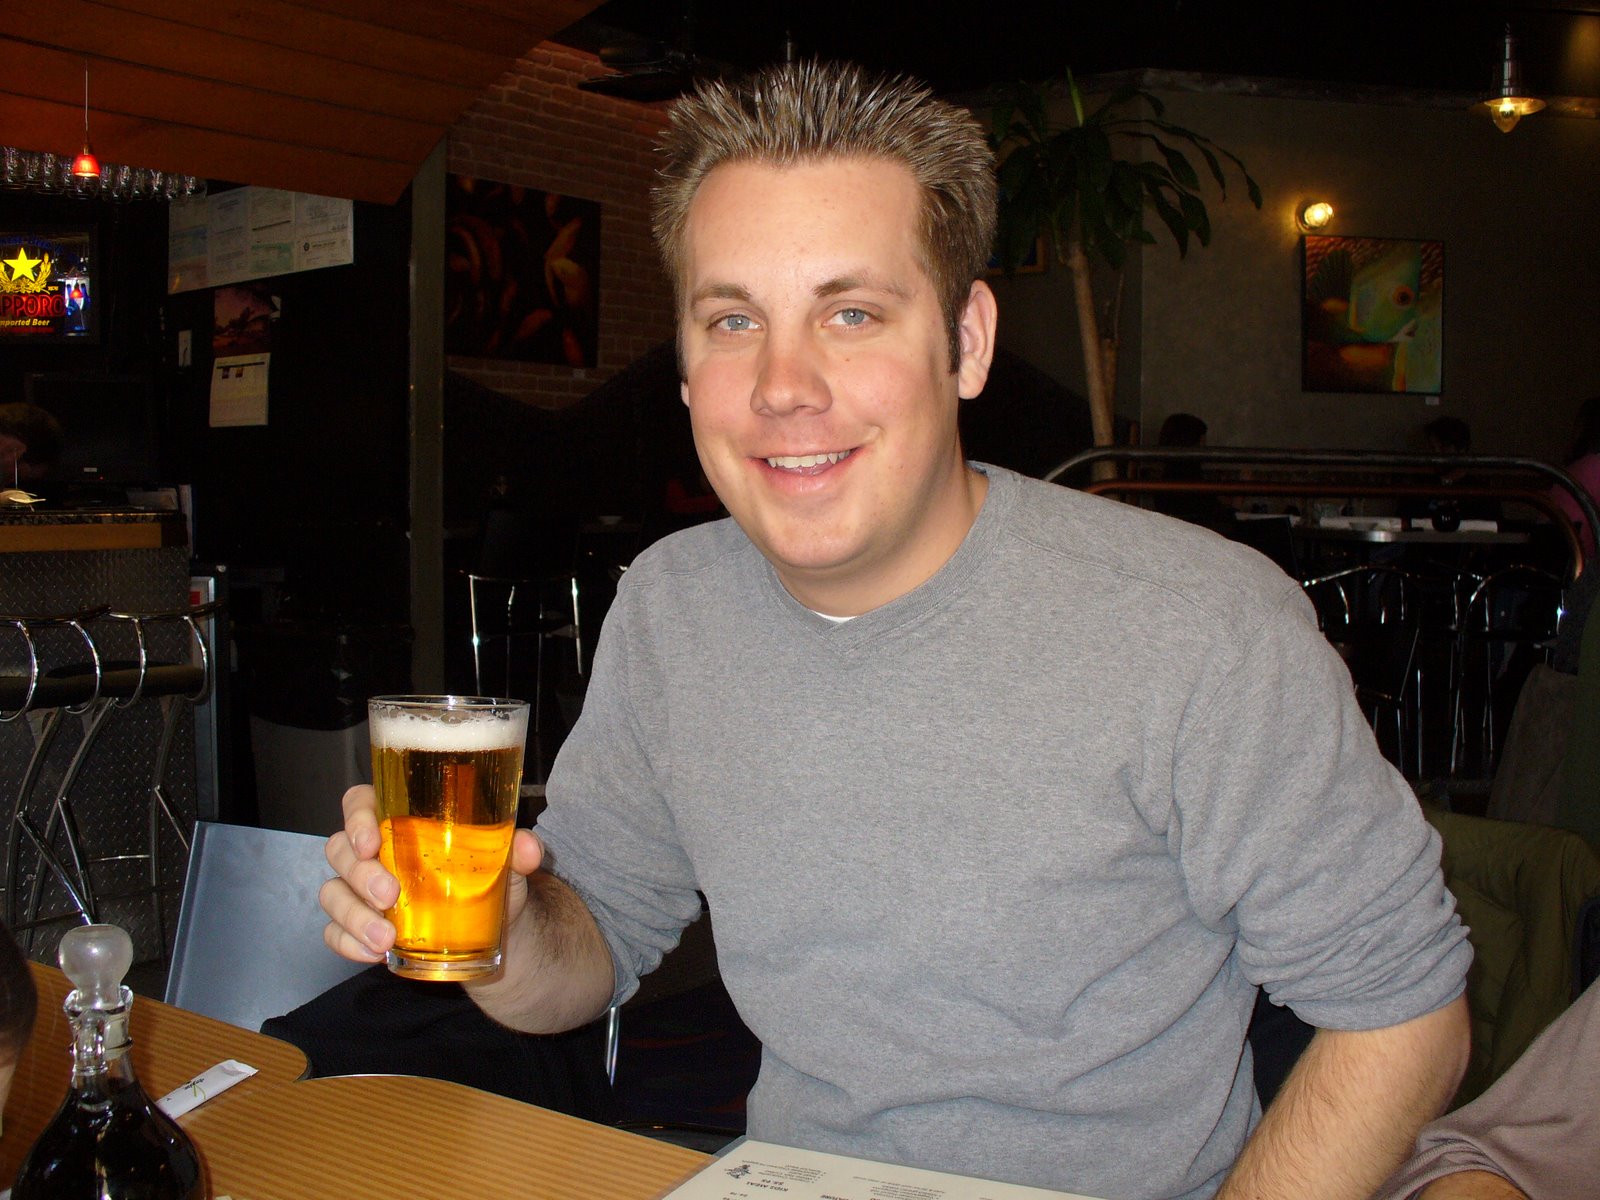 [John+with+a+beer+on+his+birthday+2+18+2008+japango.JPG]